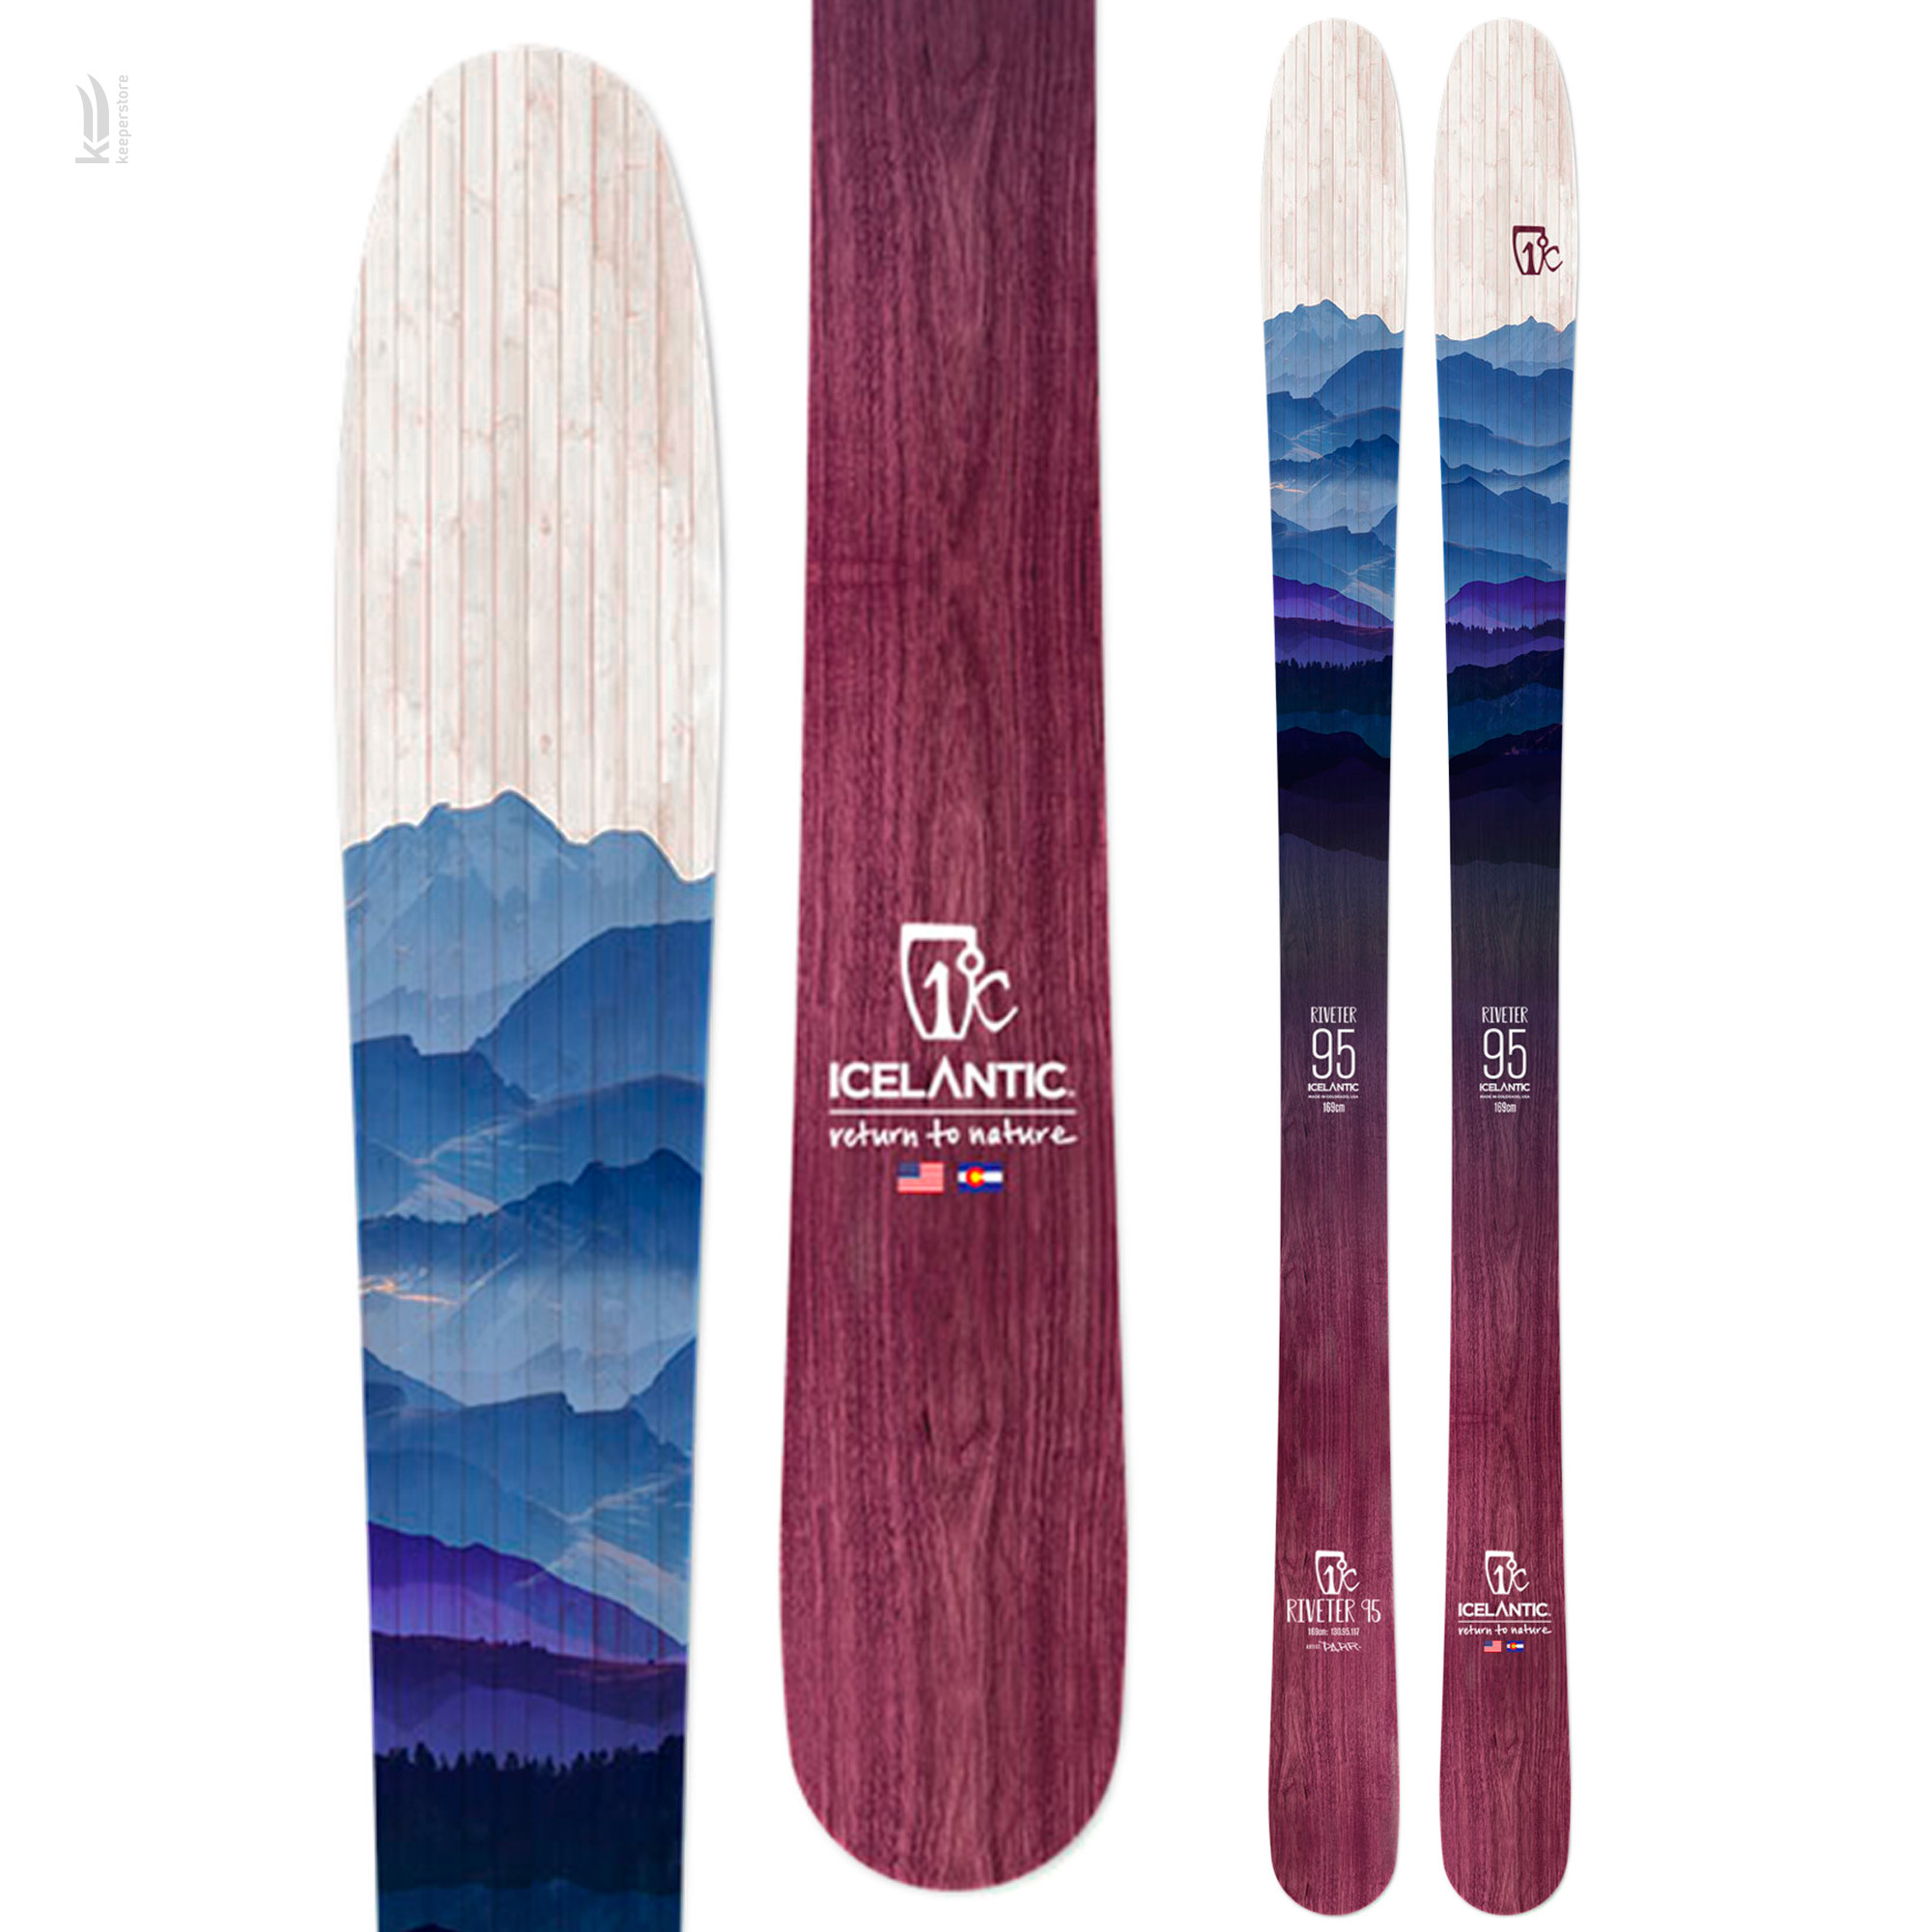 Лыжи для фрирайда Icelantic Riveter 95 2020/2021 162cm